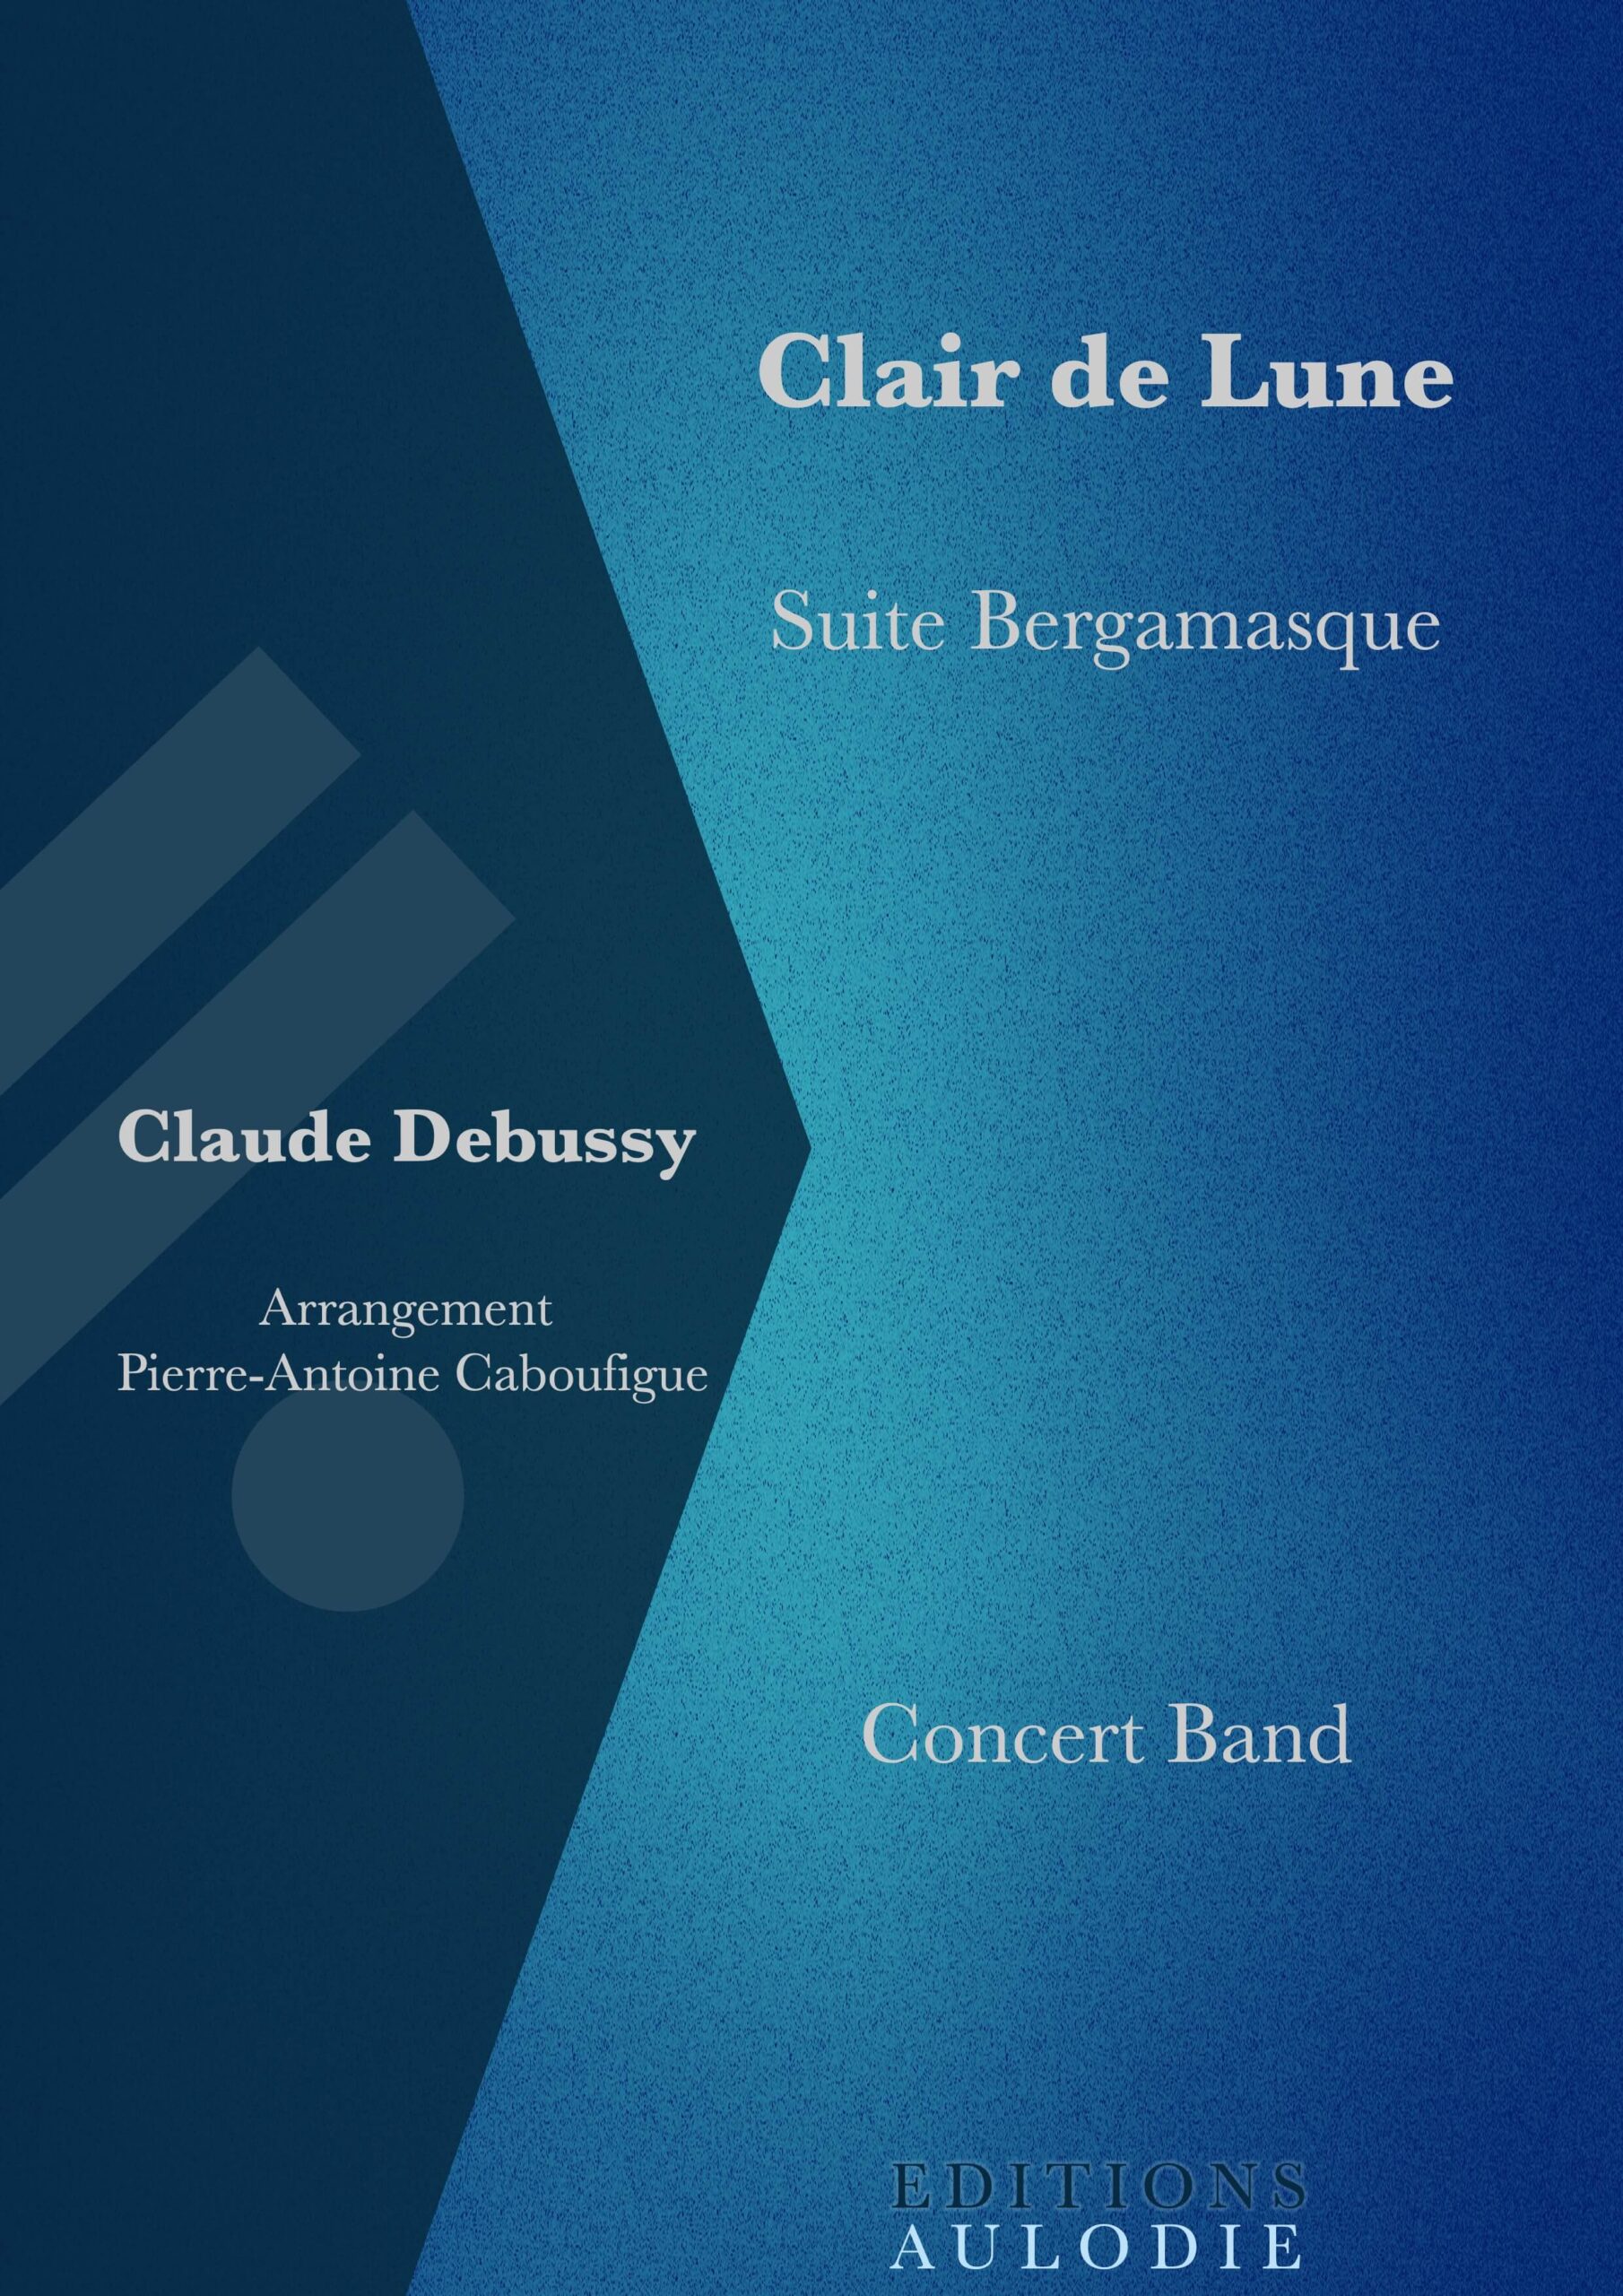 EA01049-Clair_de_Lune-Suite_Bergamasque-Claude_Debussy-Concert_Band